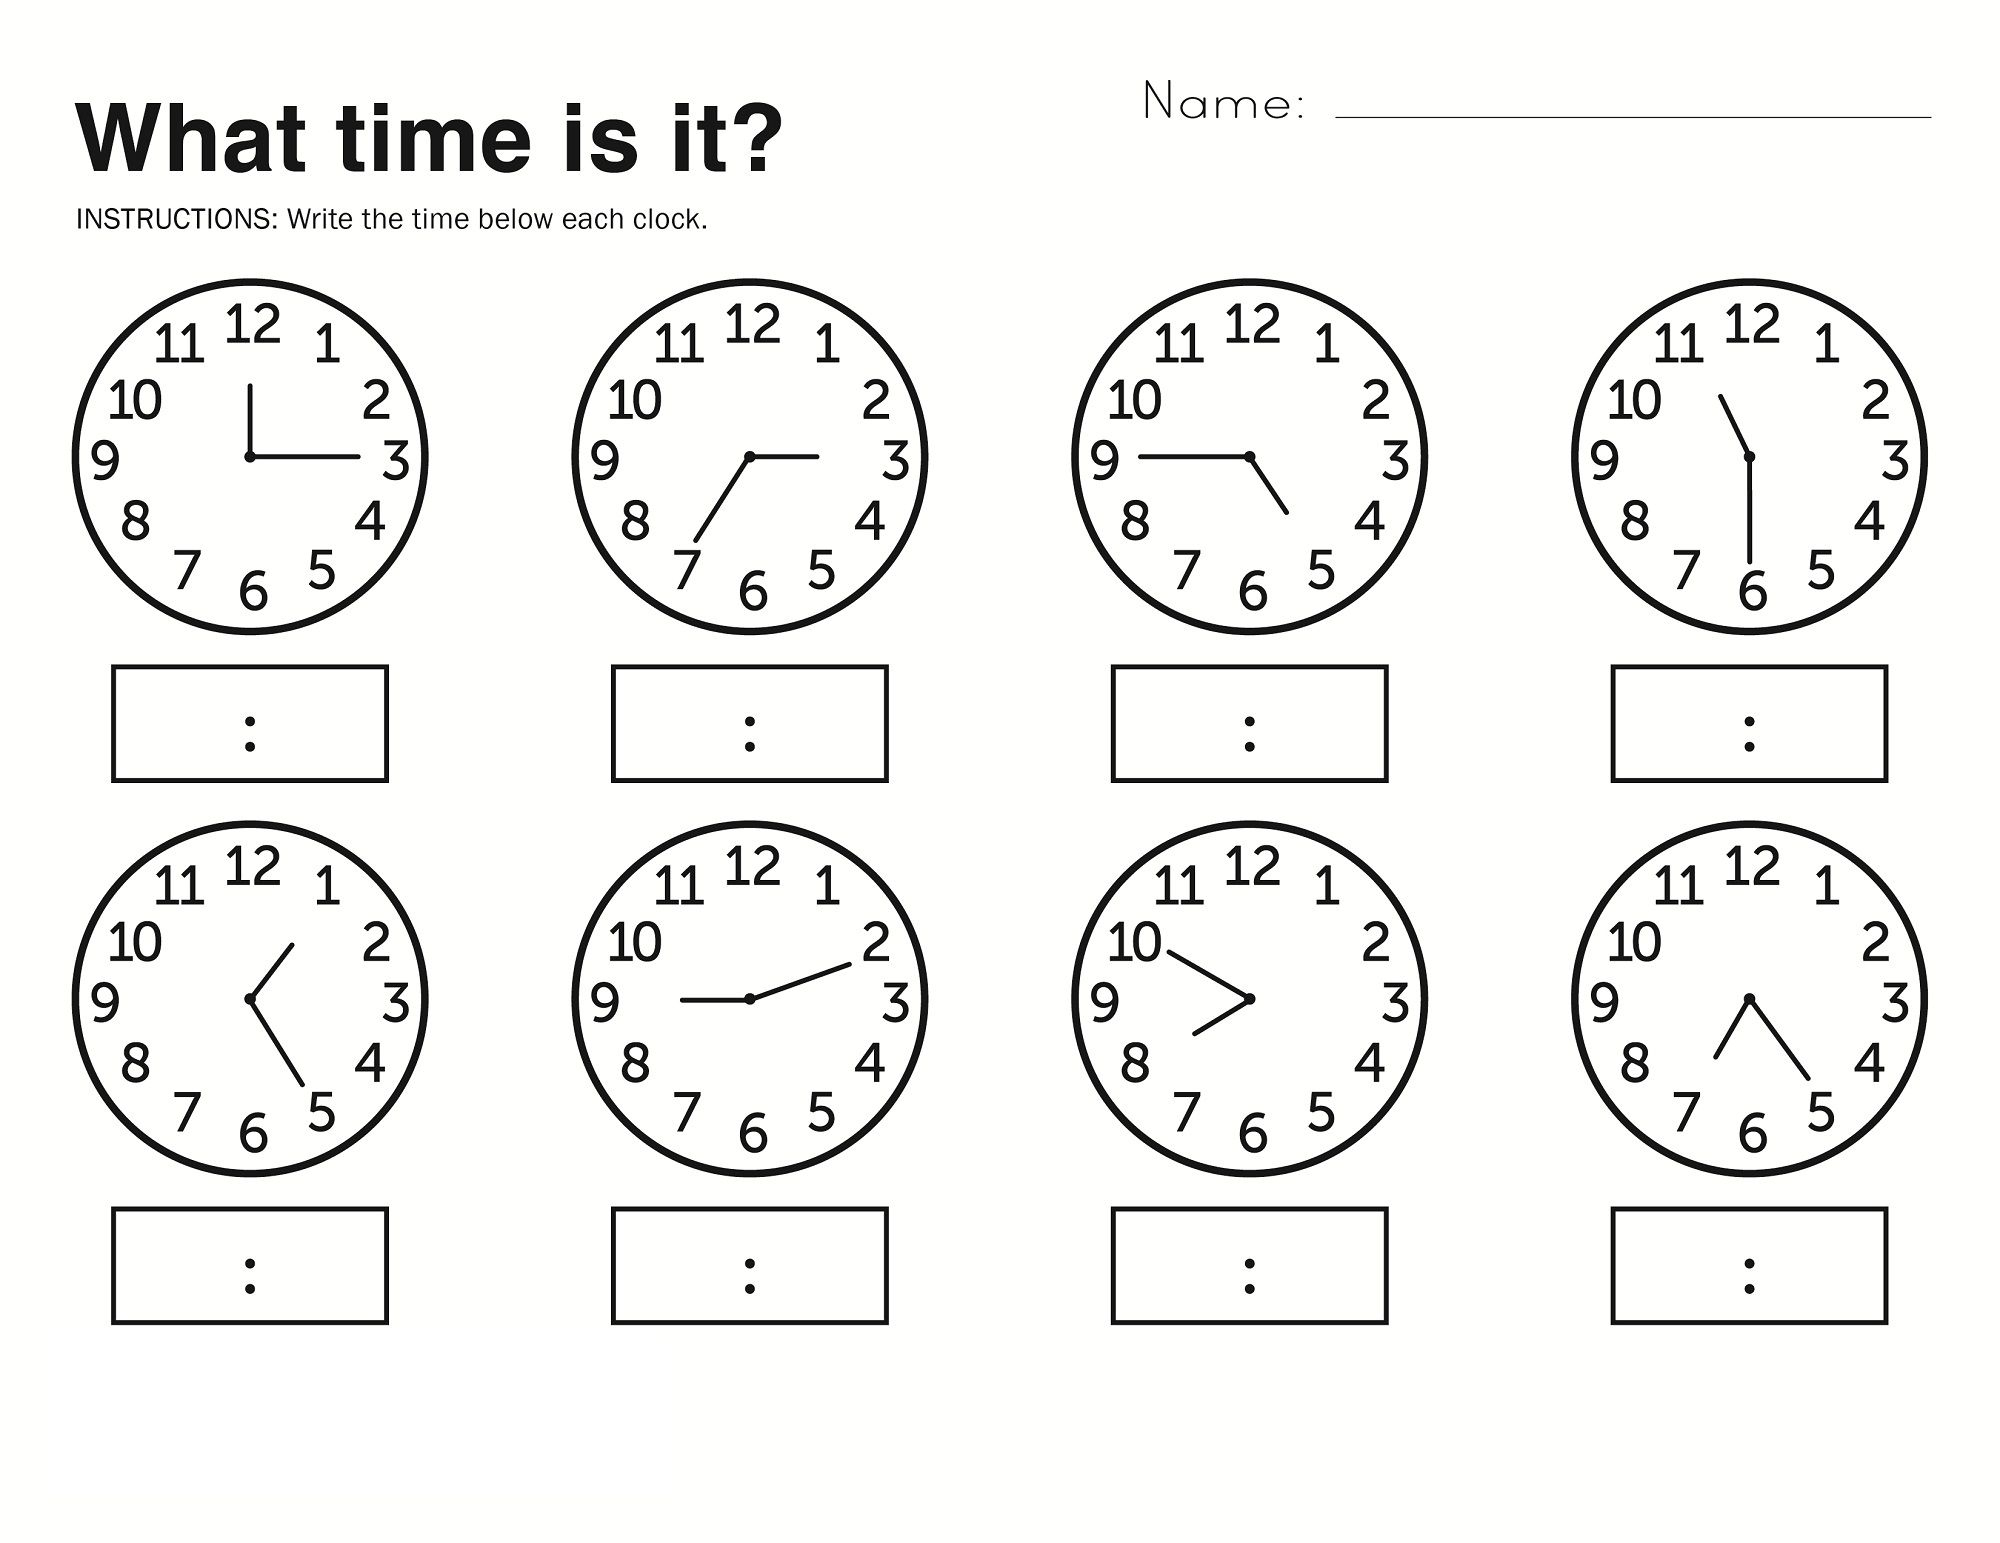 Time Elapsed Worksheets To Print | Math Fun | Free Kindergarten - Elapsed Time Worksheets Free Printable